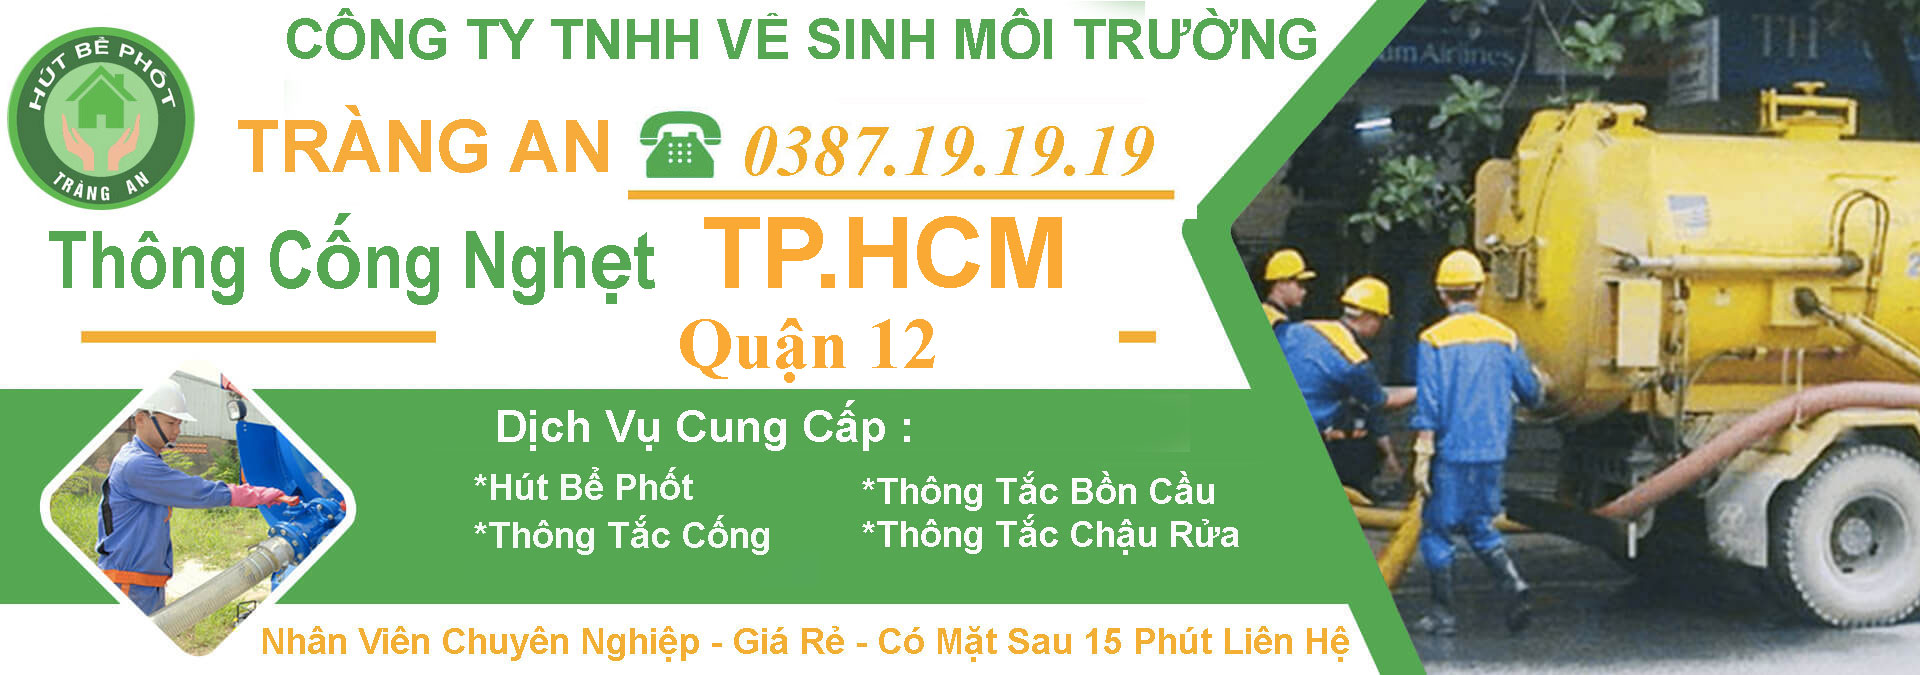 Thong Cong Nghet Quan 12 Tphcm